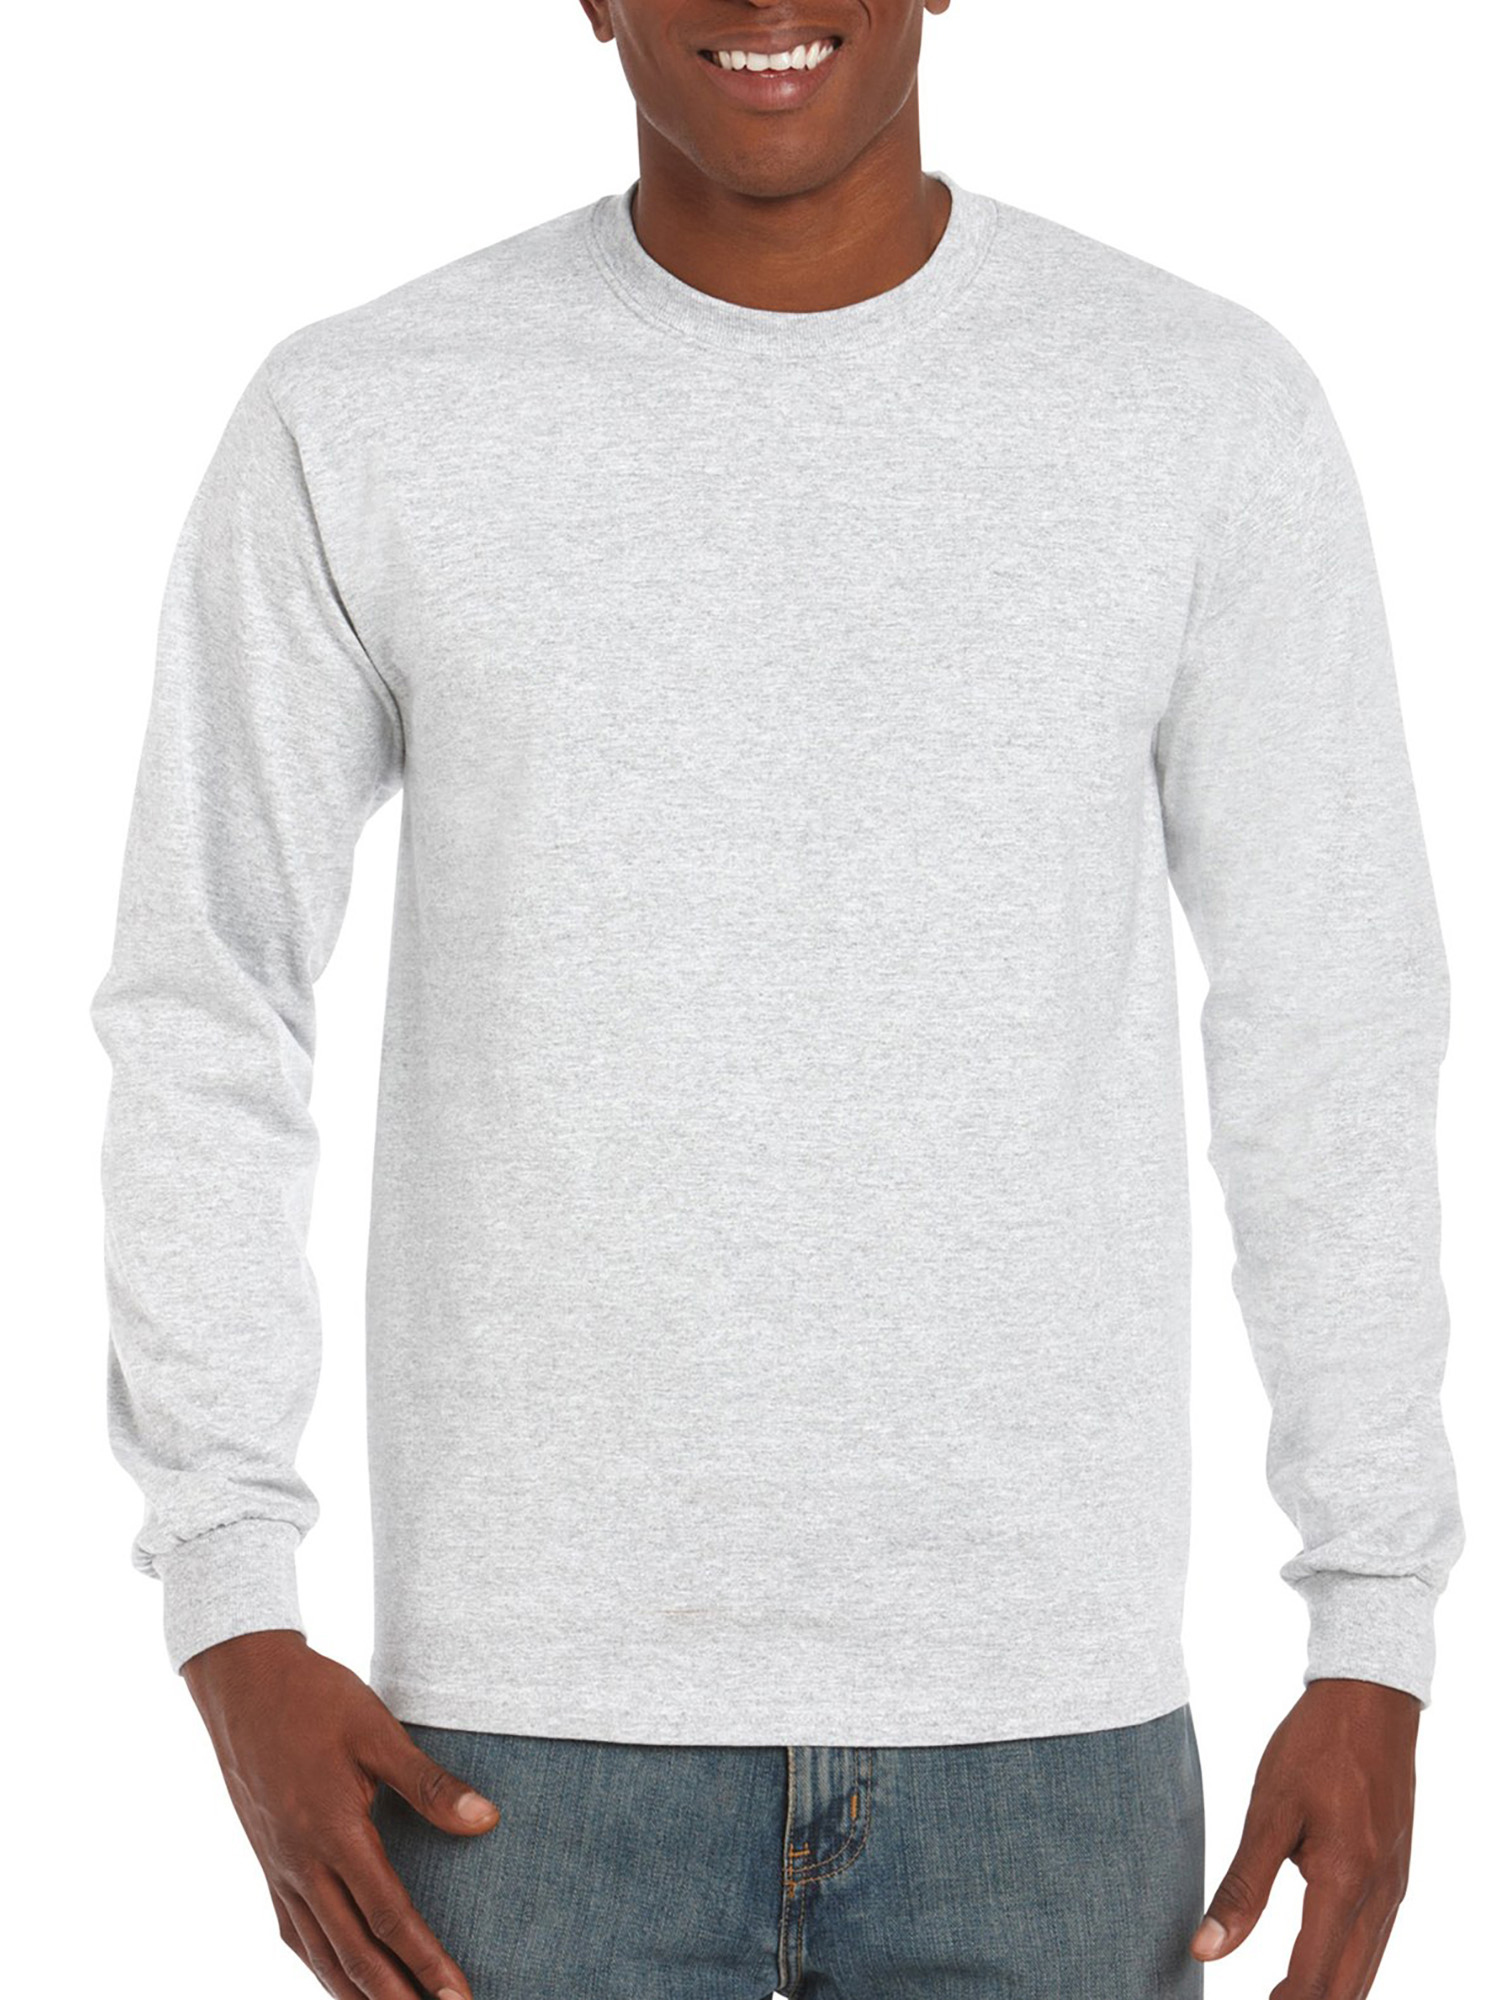 Gildan - Gildan Mens Classic Long Sleeve T-Shirt - Walmart.com